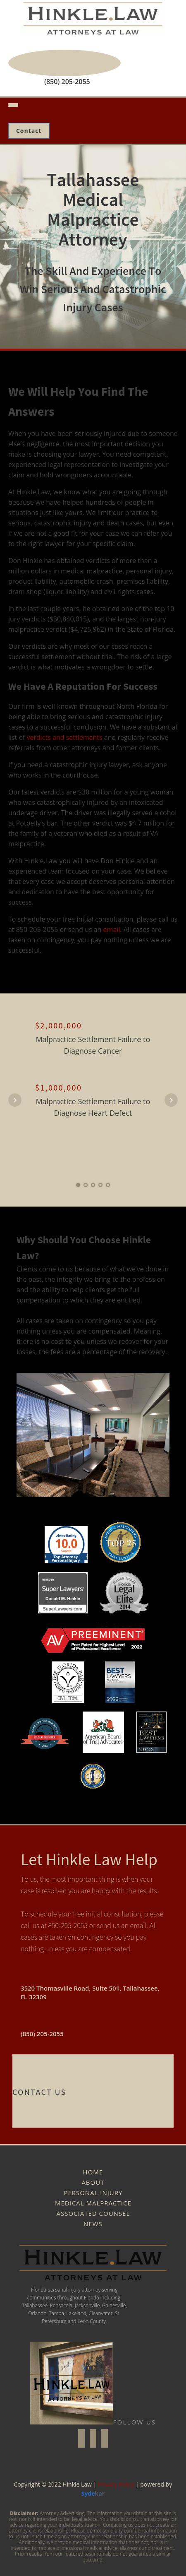 Hinkle & Foran - Tallahassee FL Lawyers